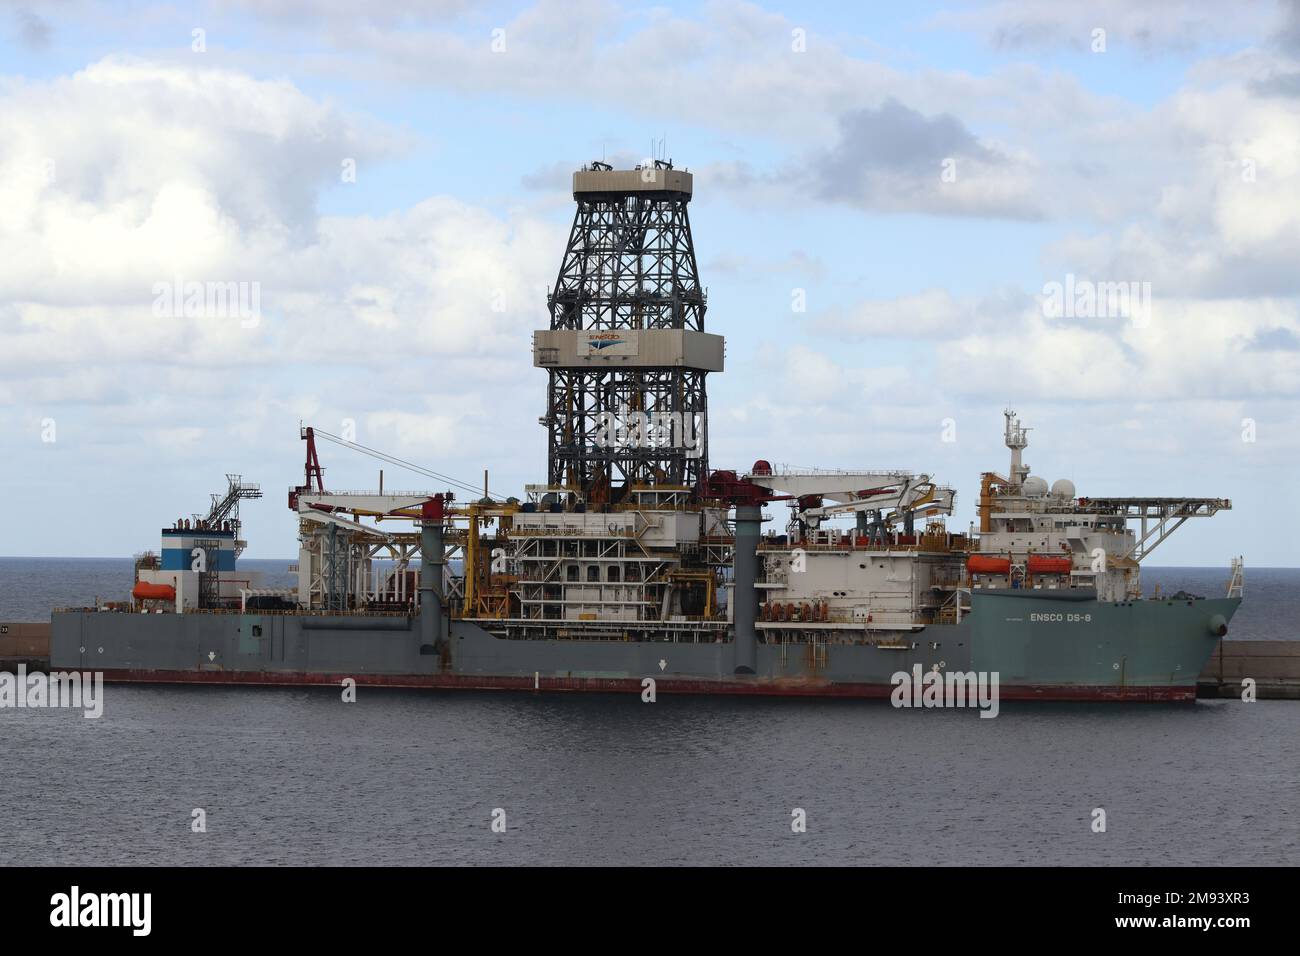 The 57,000 ton drill ship Ensco DS-8 moored at Las Palmas, Grand Canaria, Spain. Stock Photo